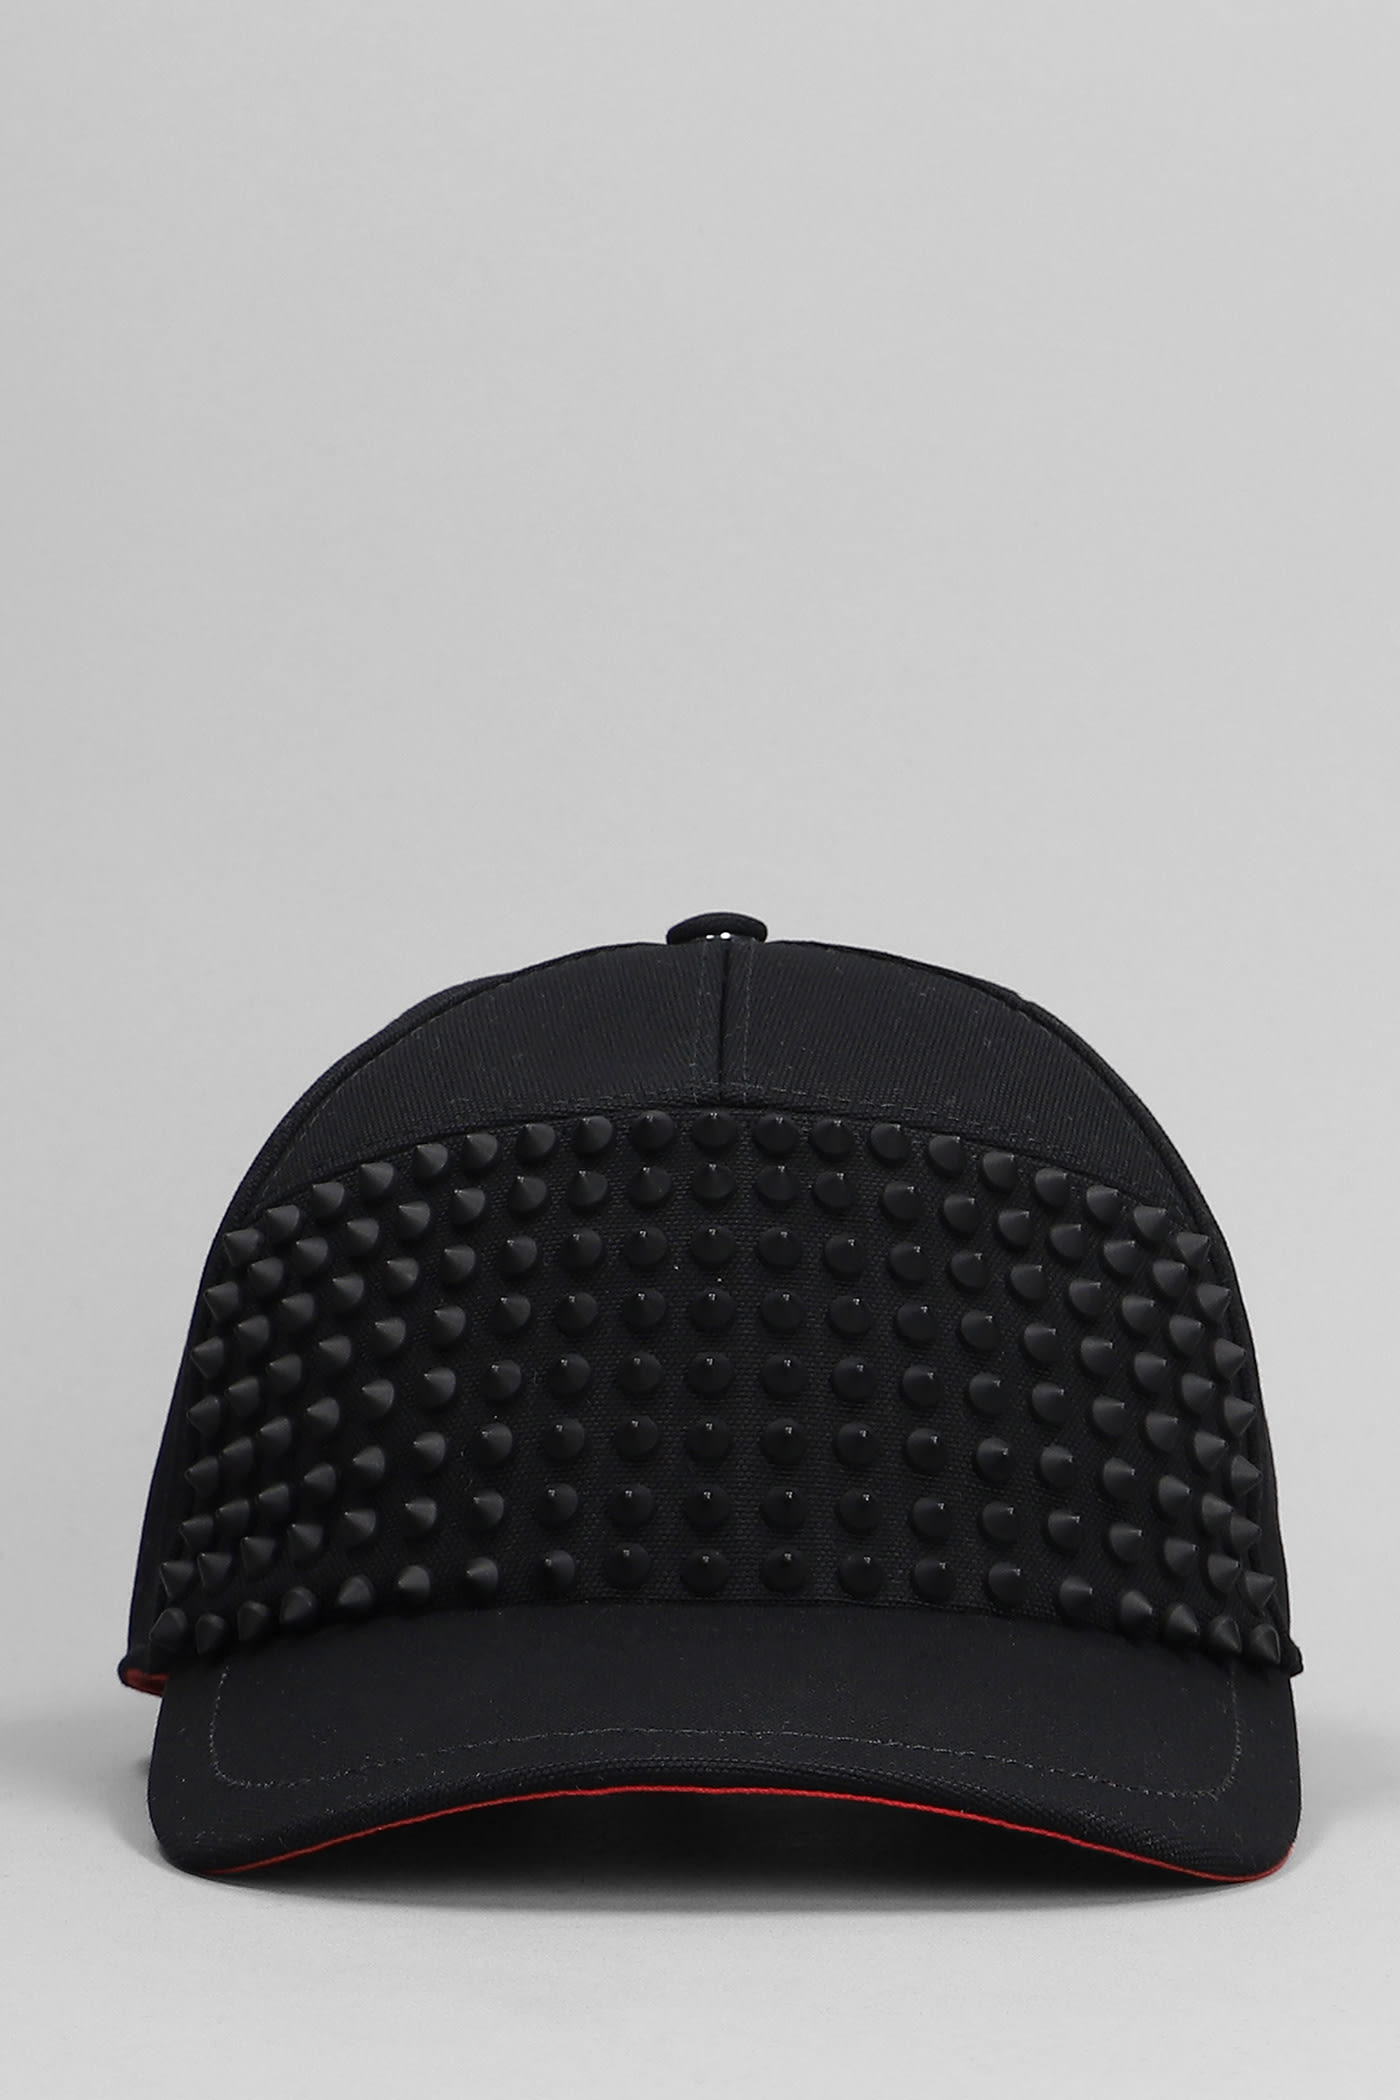 Christian Louboutin Hats In Black Cotton